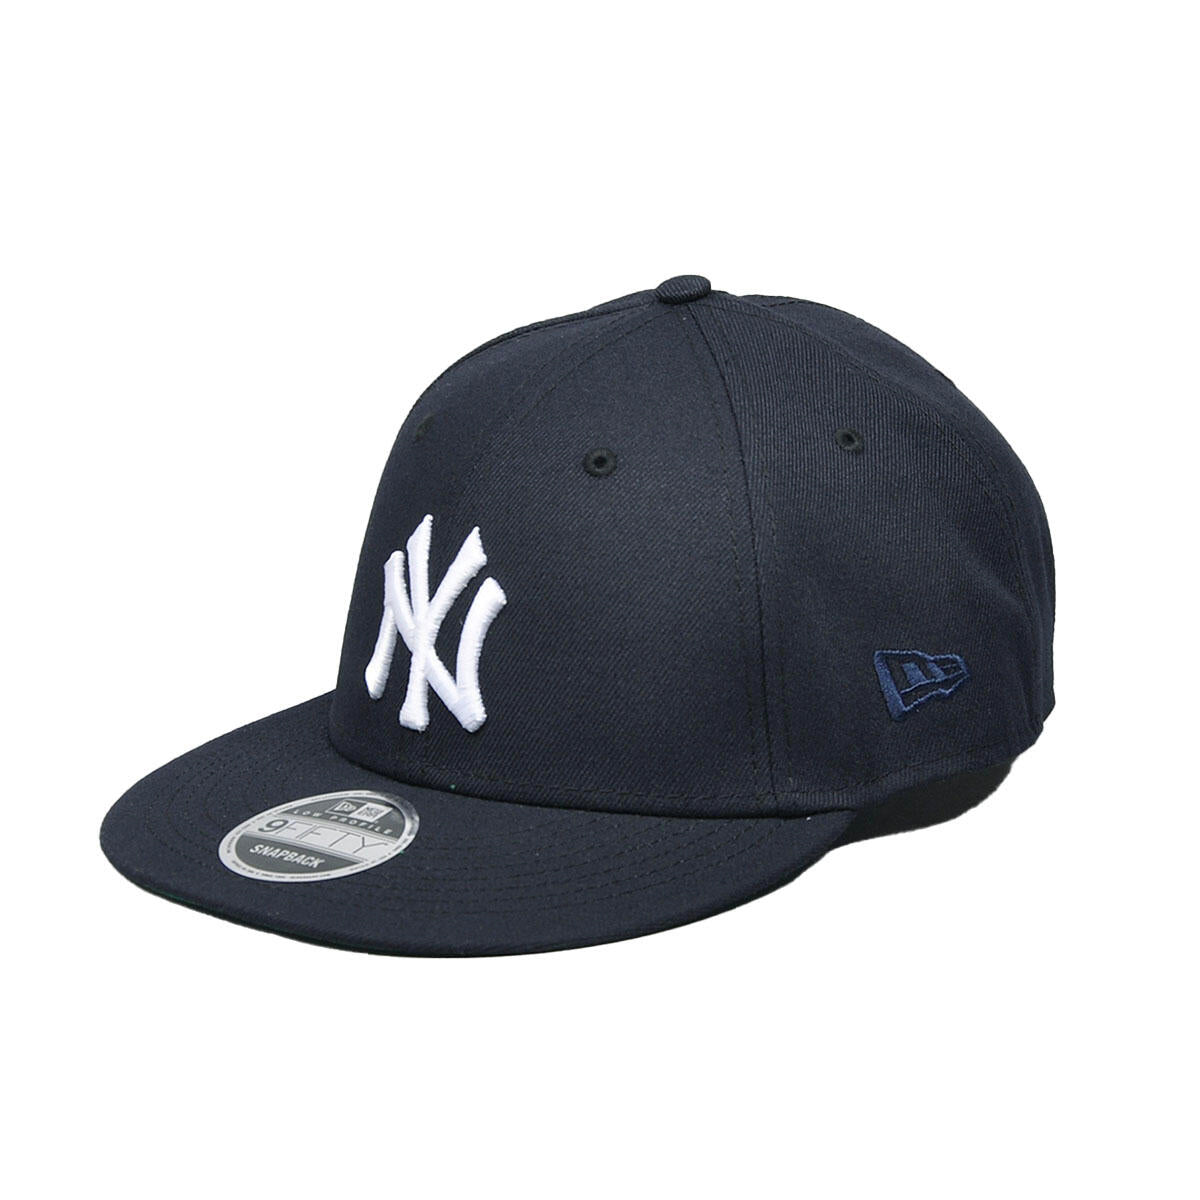 Alltimers New Era Yankees Cap